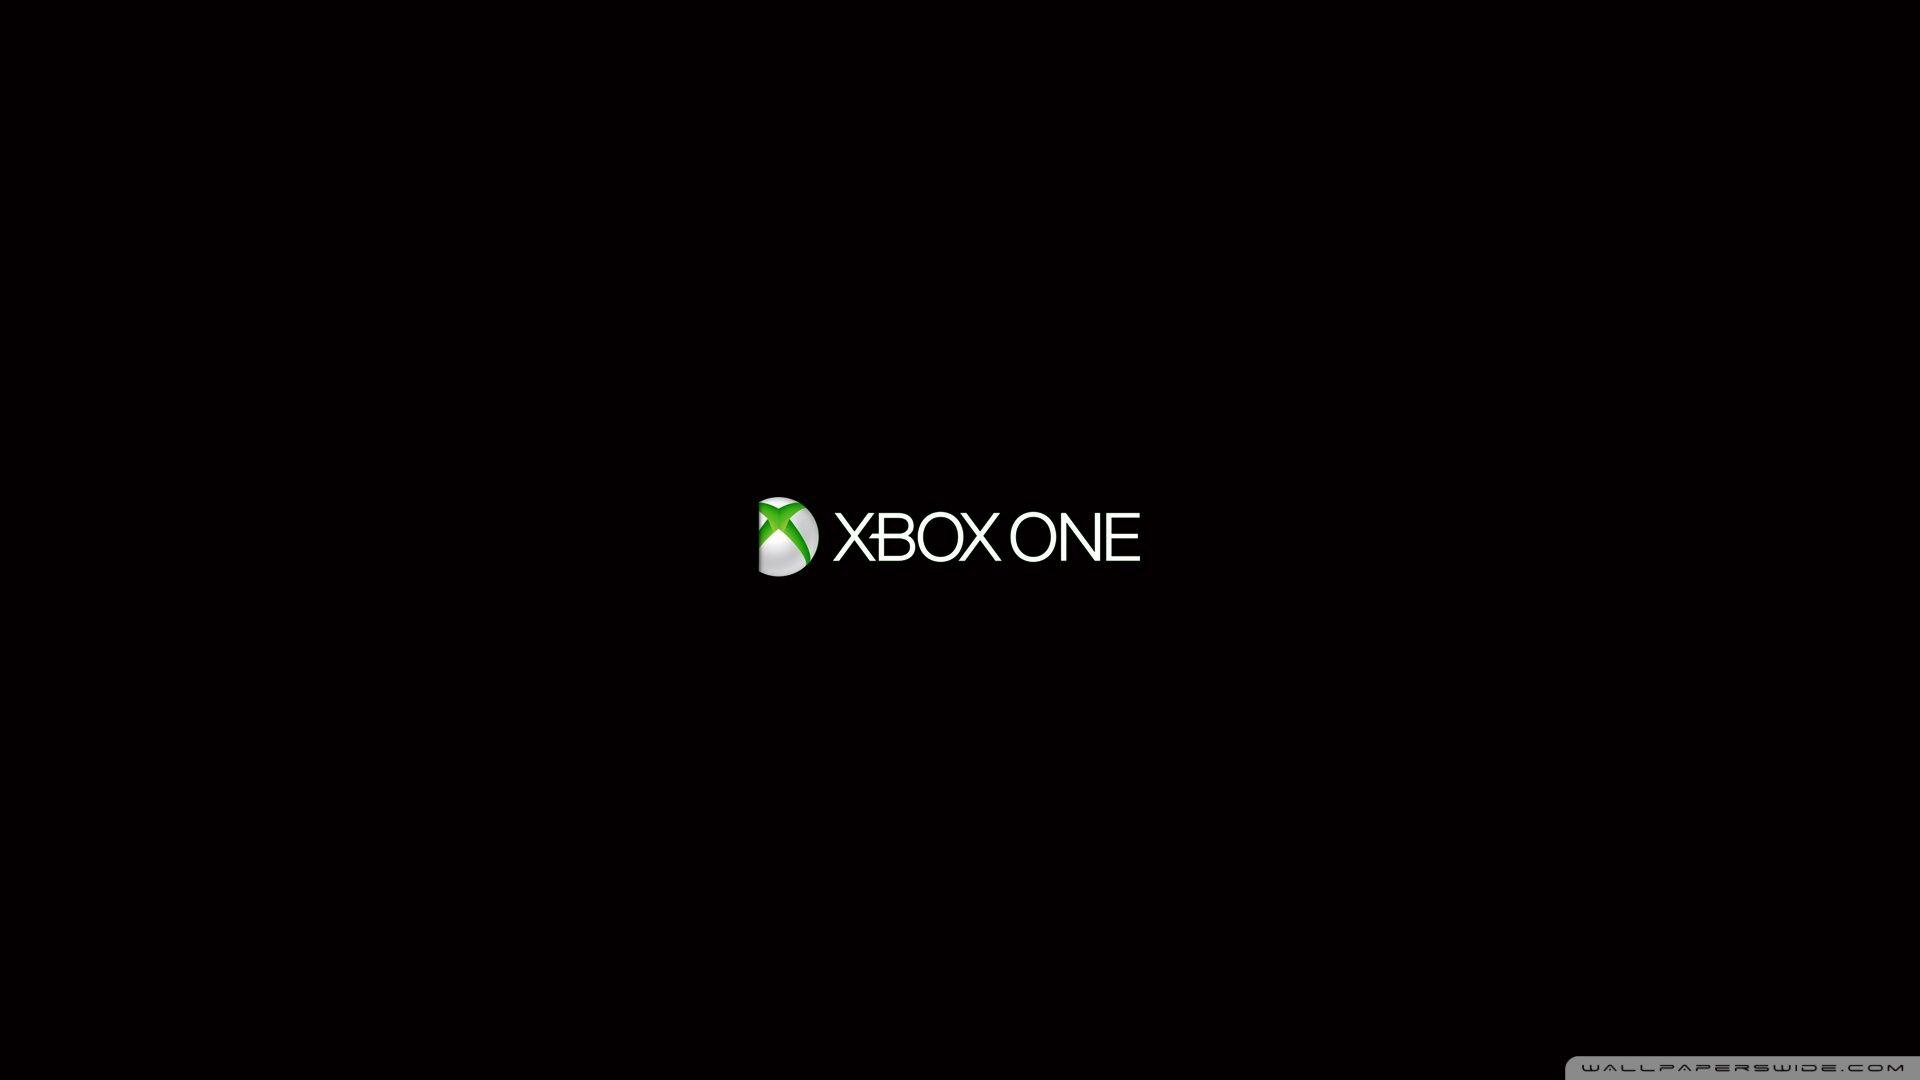 Xbox One black HD desktop wallpaper, Widescreen, High Definition